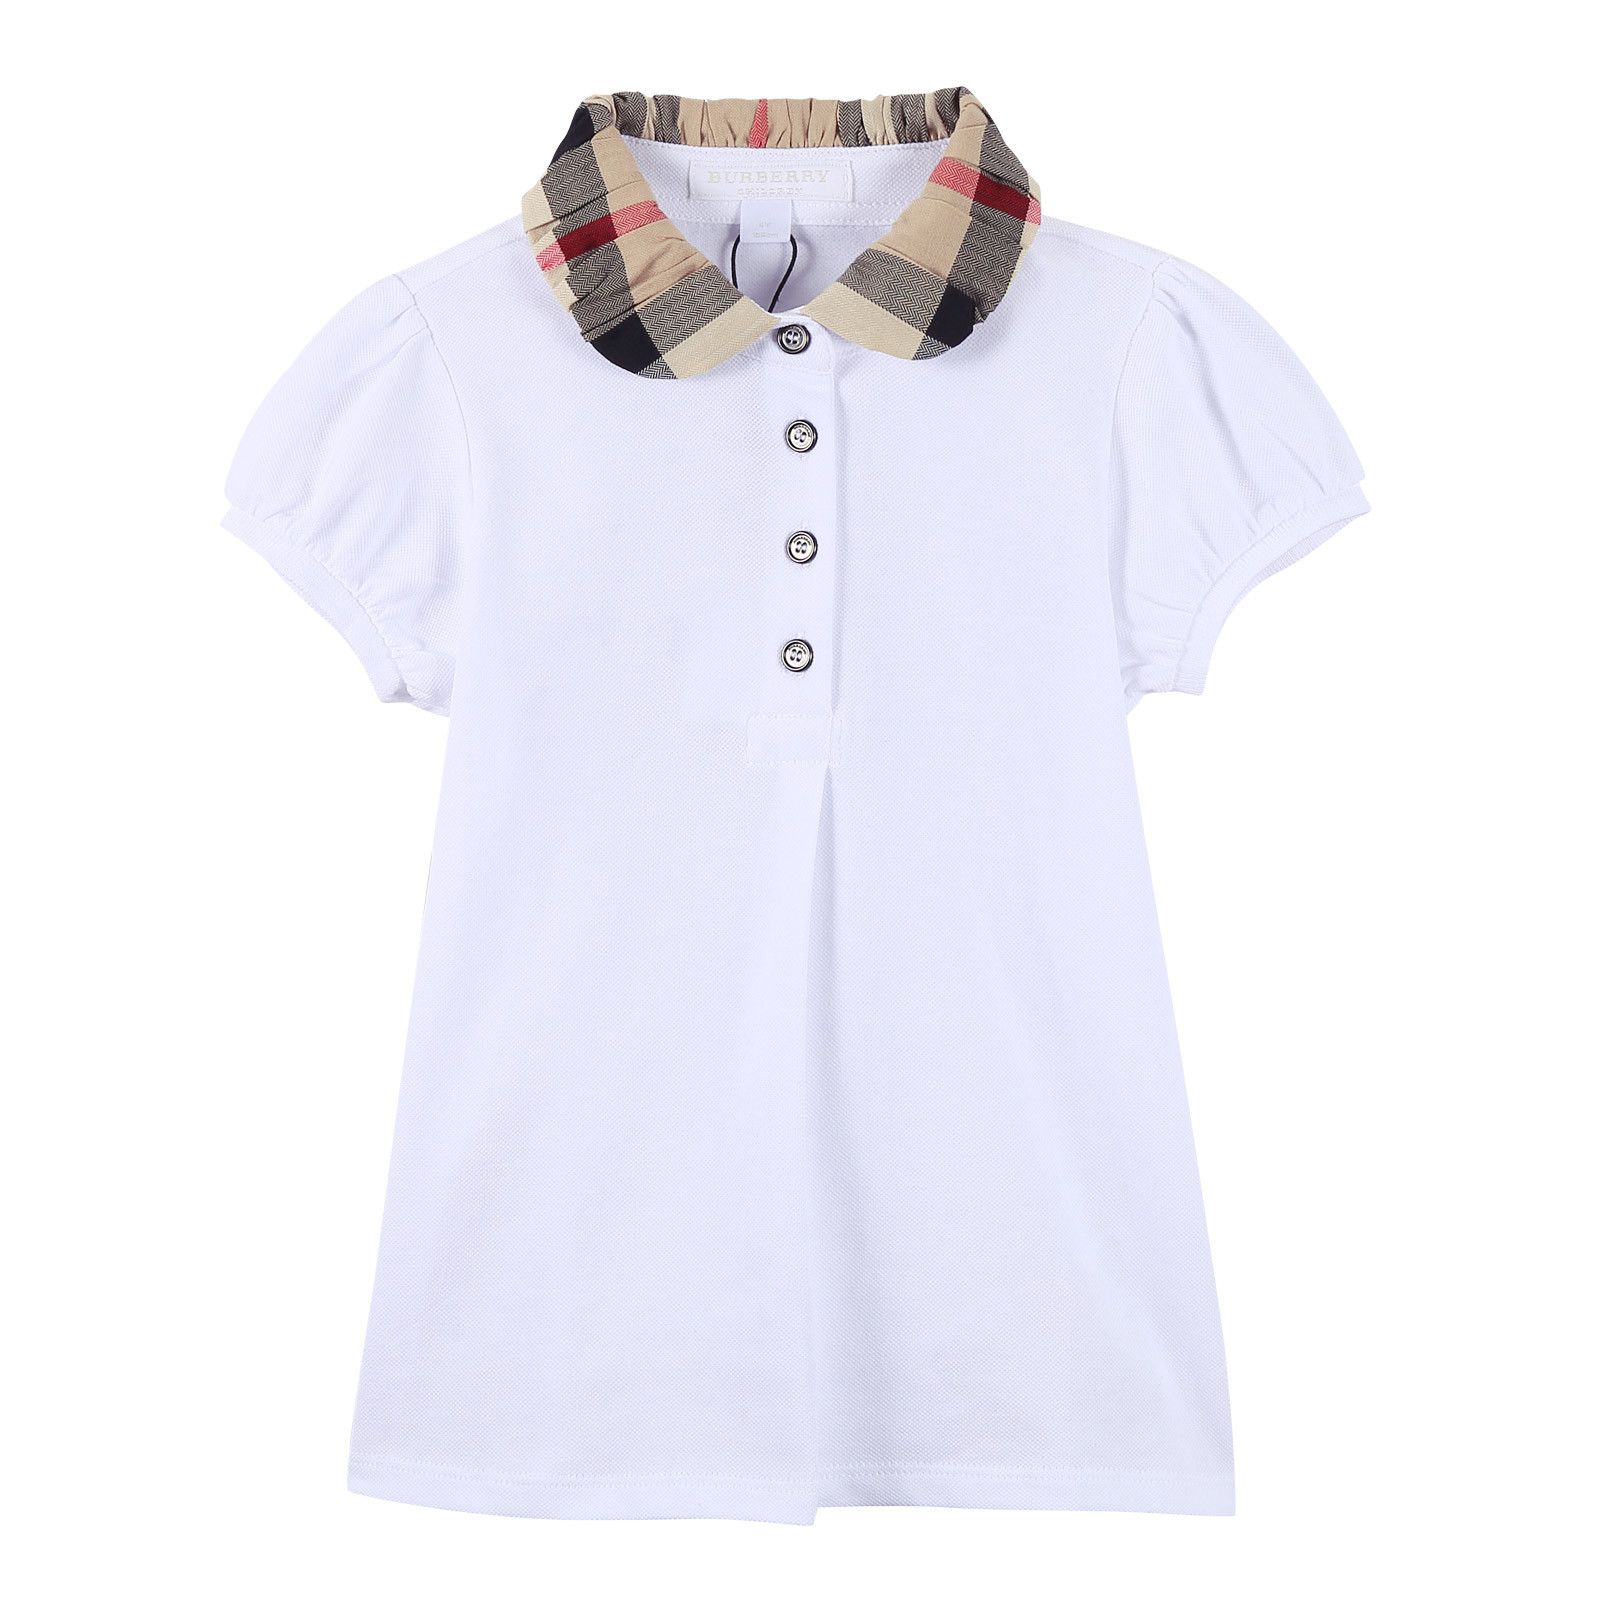 Girls White Cotton T-Shirt With Check Collar - CÉMAROSE | Children's Fashion Store - 1